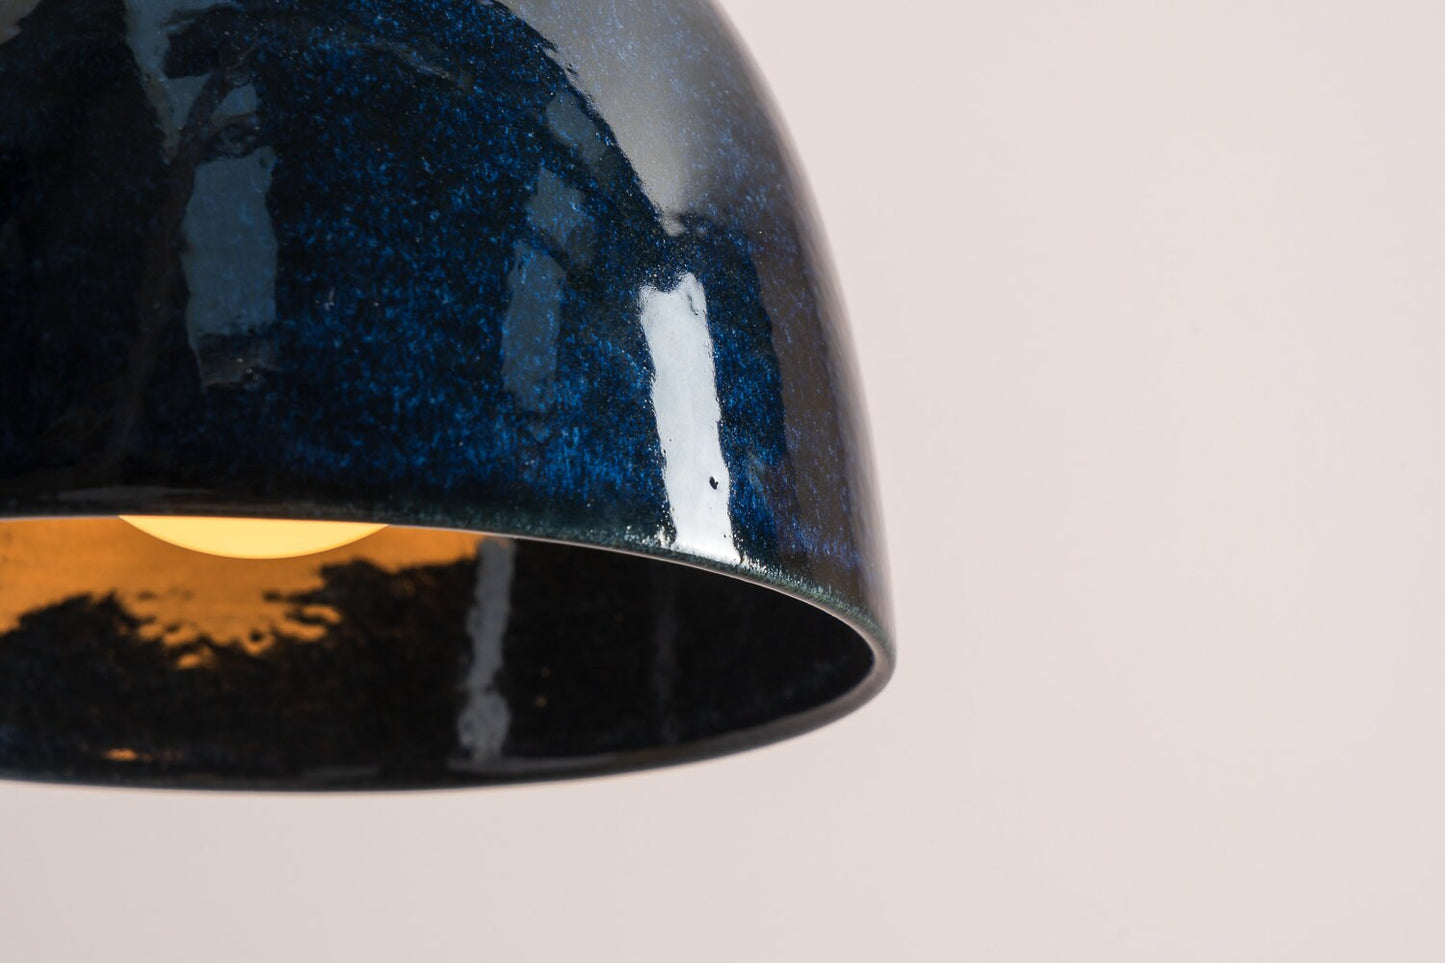 Element pendant light in a Lagoon blue glaze by StudioHaran